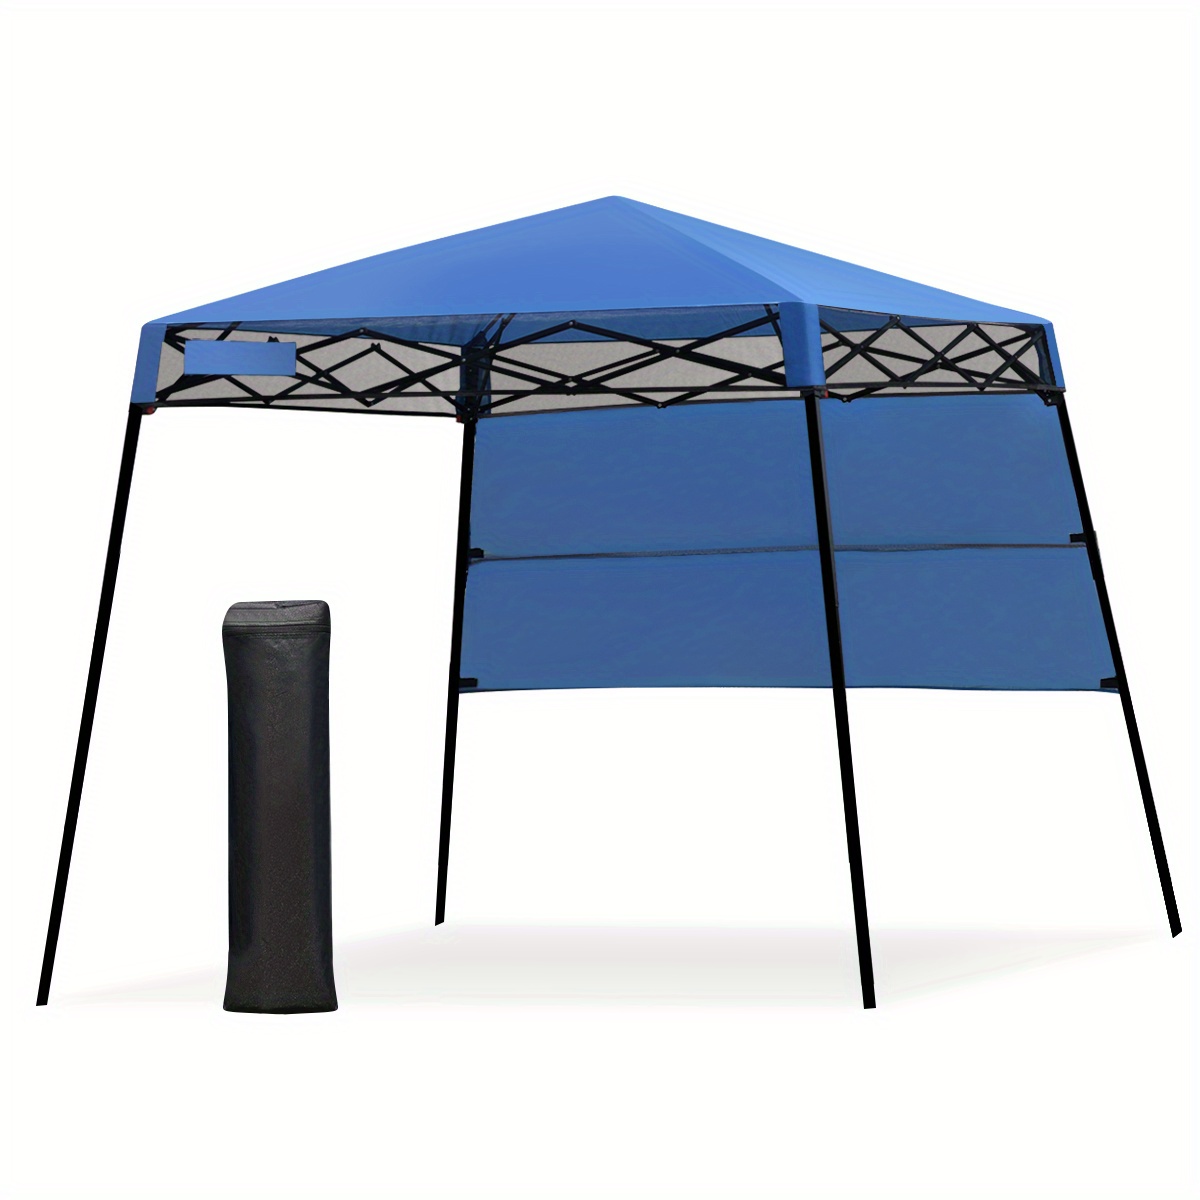 

Lifezeal 7x7 Ft Slant Leg Pop-up Canopy Tent Shelter Adjustable Portable Carry Bag Blue